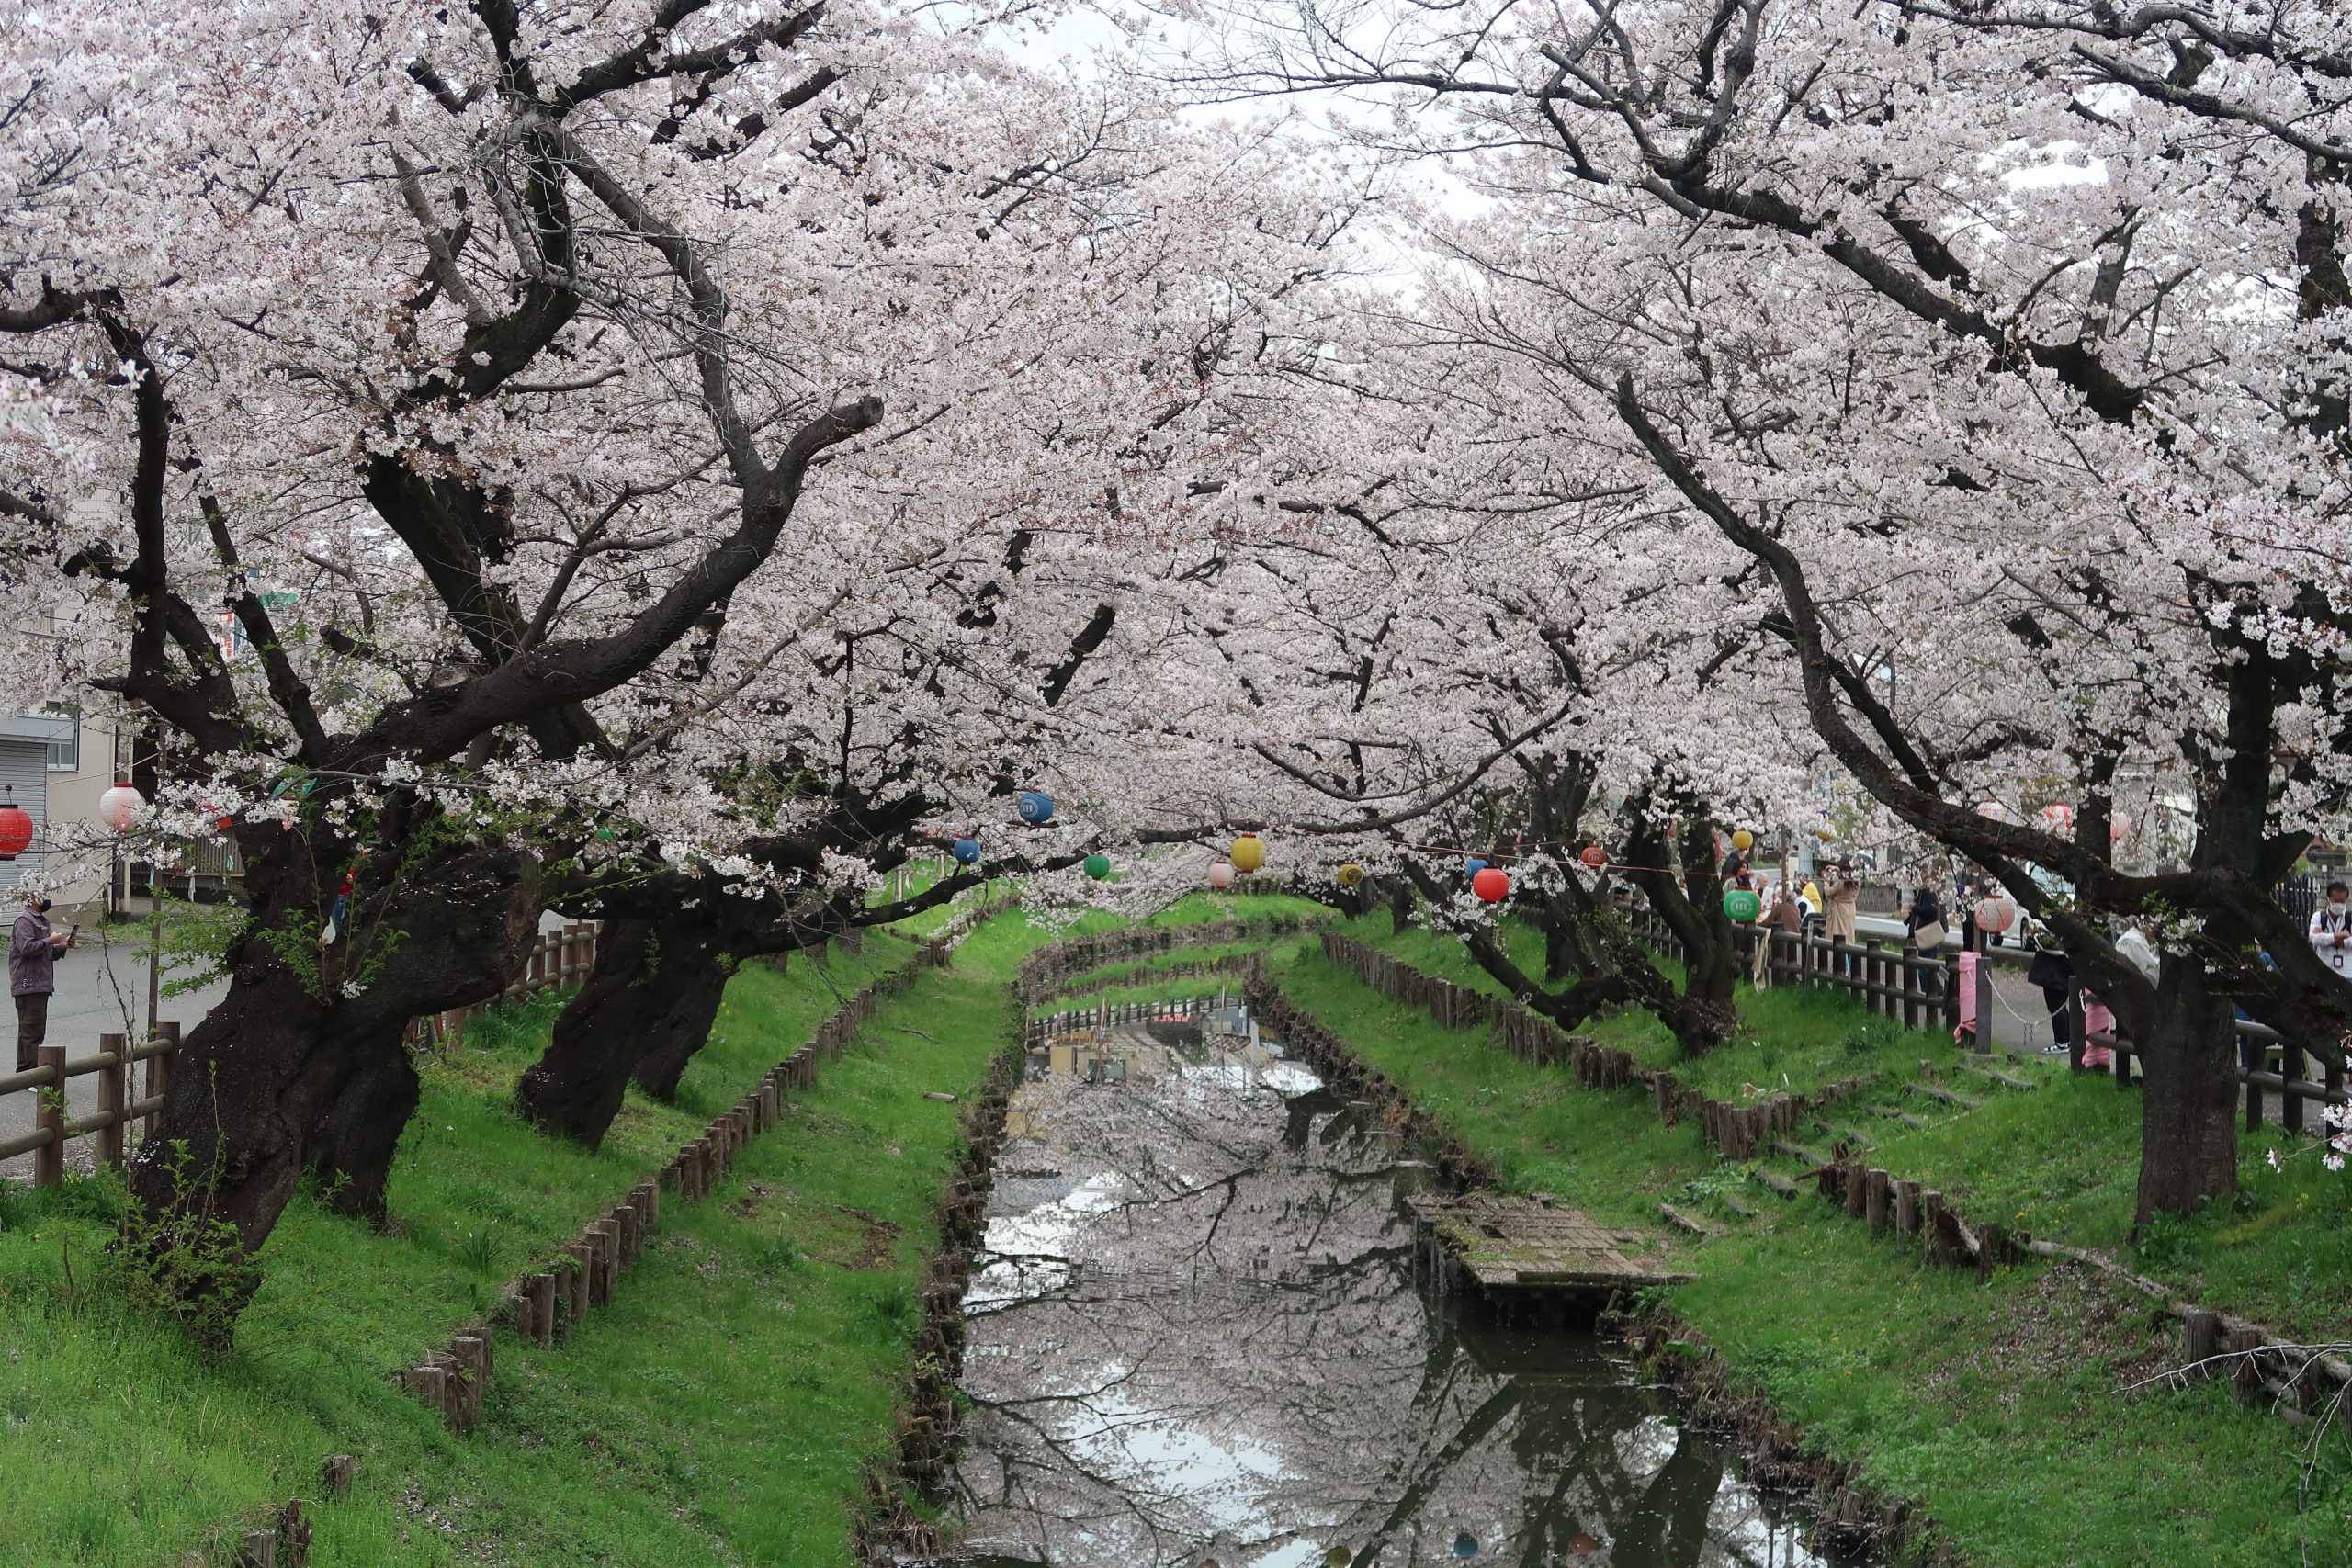 Shingashi Riverbank Cherry Blossoms kawagoe day trip from japan itinerary things to see and do